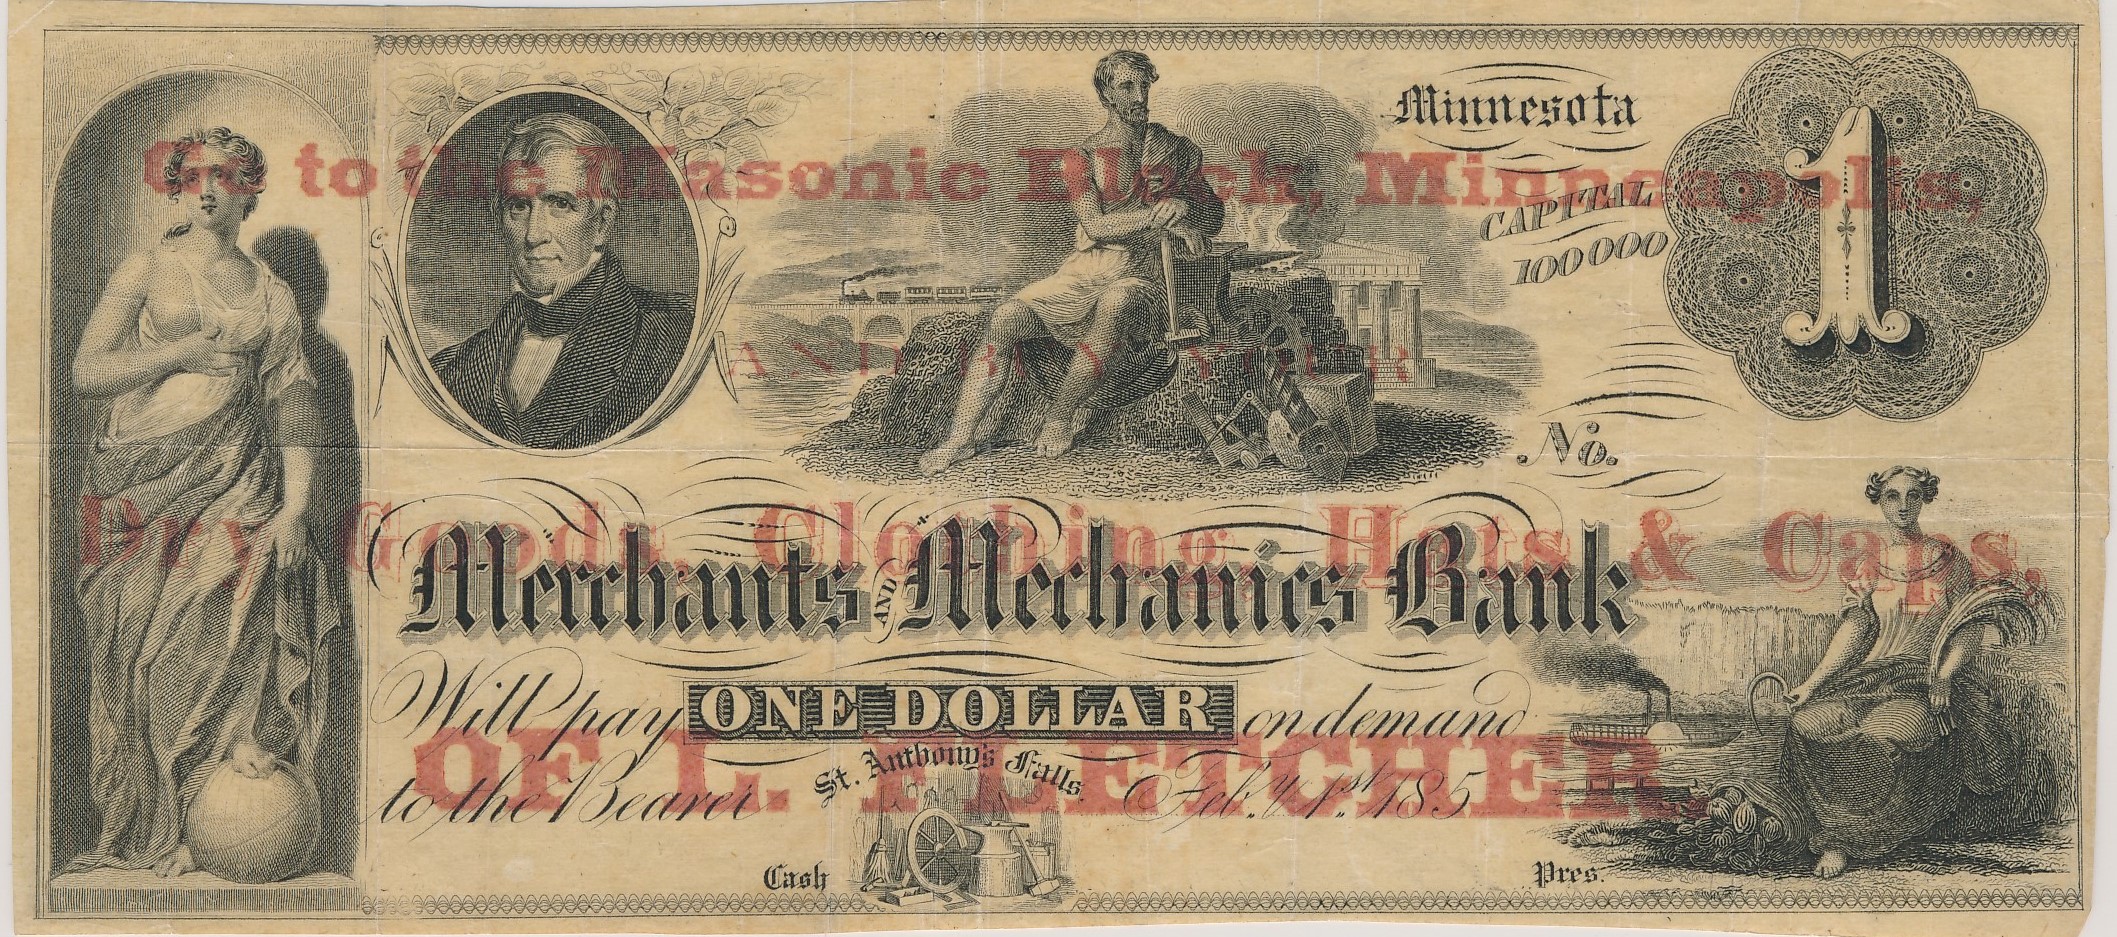 L. Fletcher overprint on $1 Merchants and Mechanics Bank